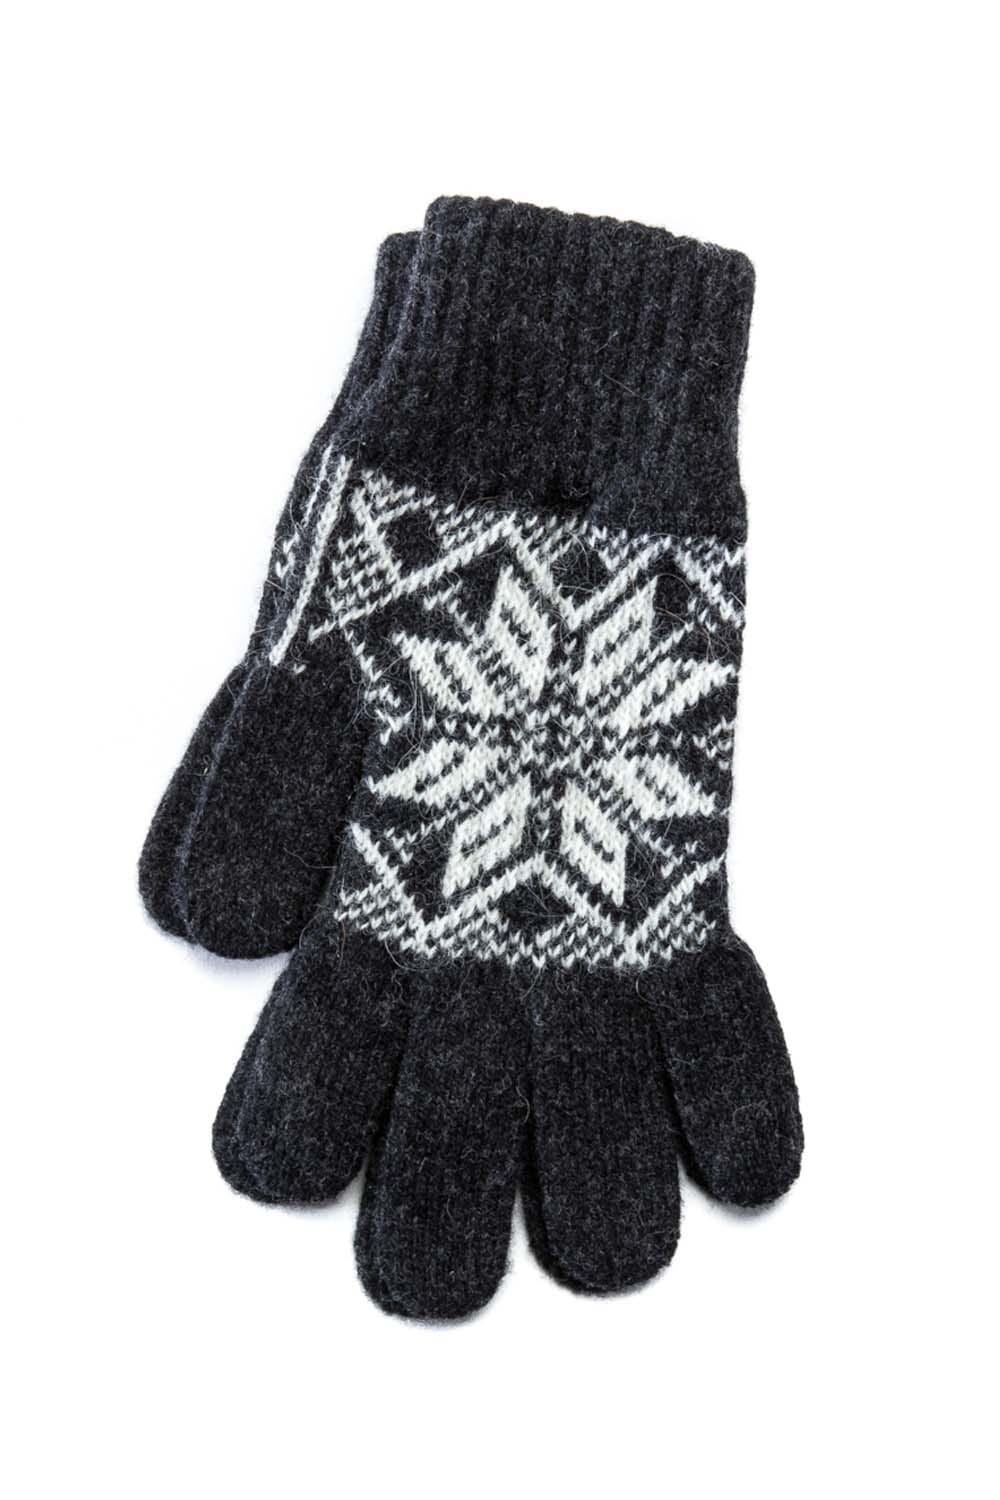 Dark Grey Icelandic Wool Gloves - Icelandic Frostrose Pattern